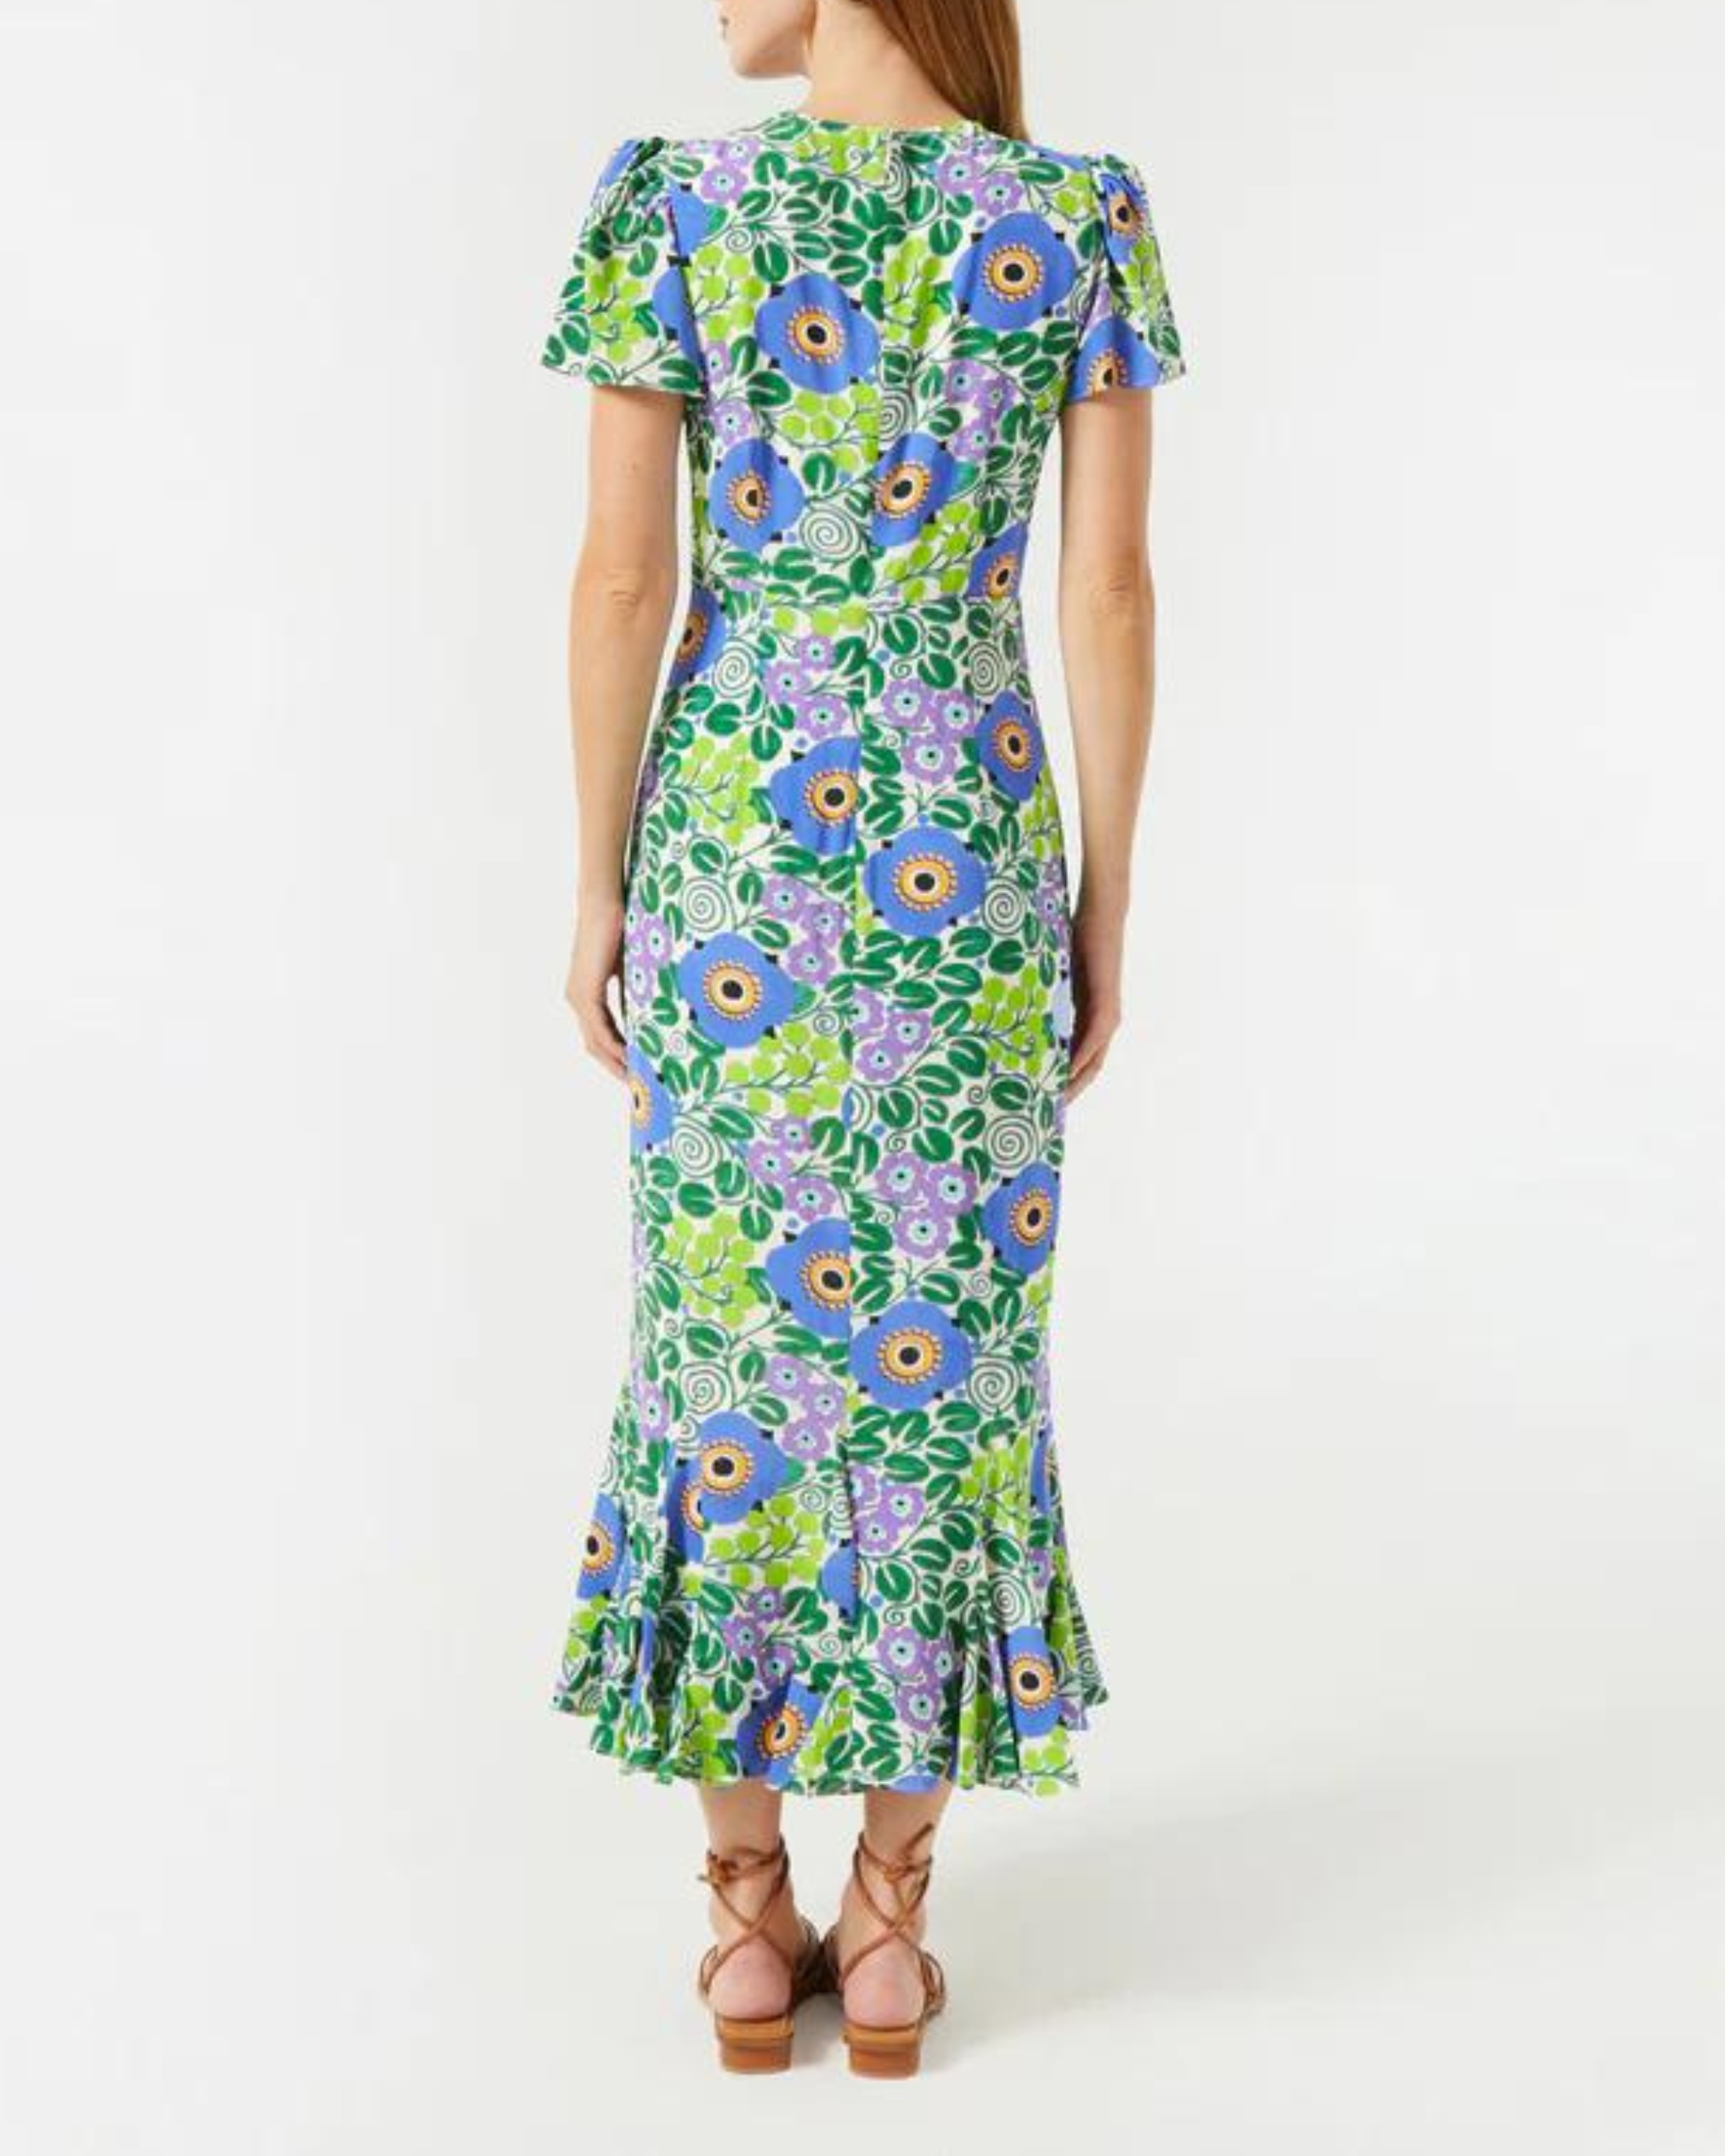 Rhode Lulani Dress in Wisteria Blossom